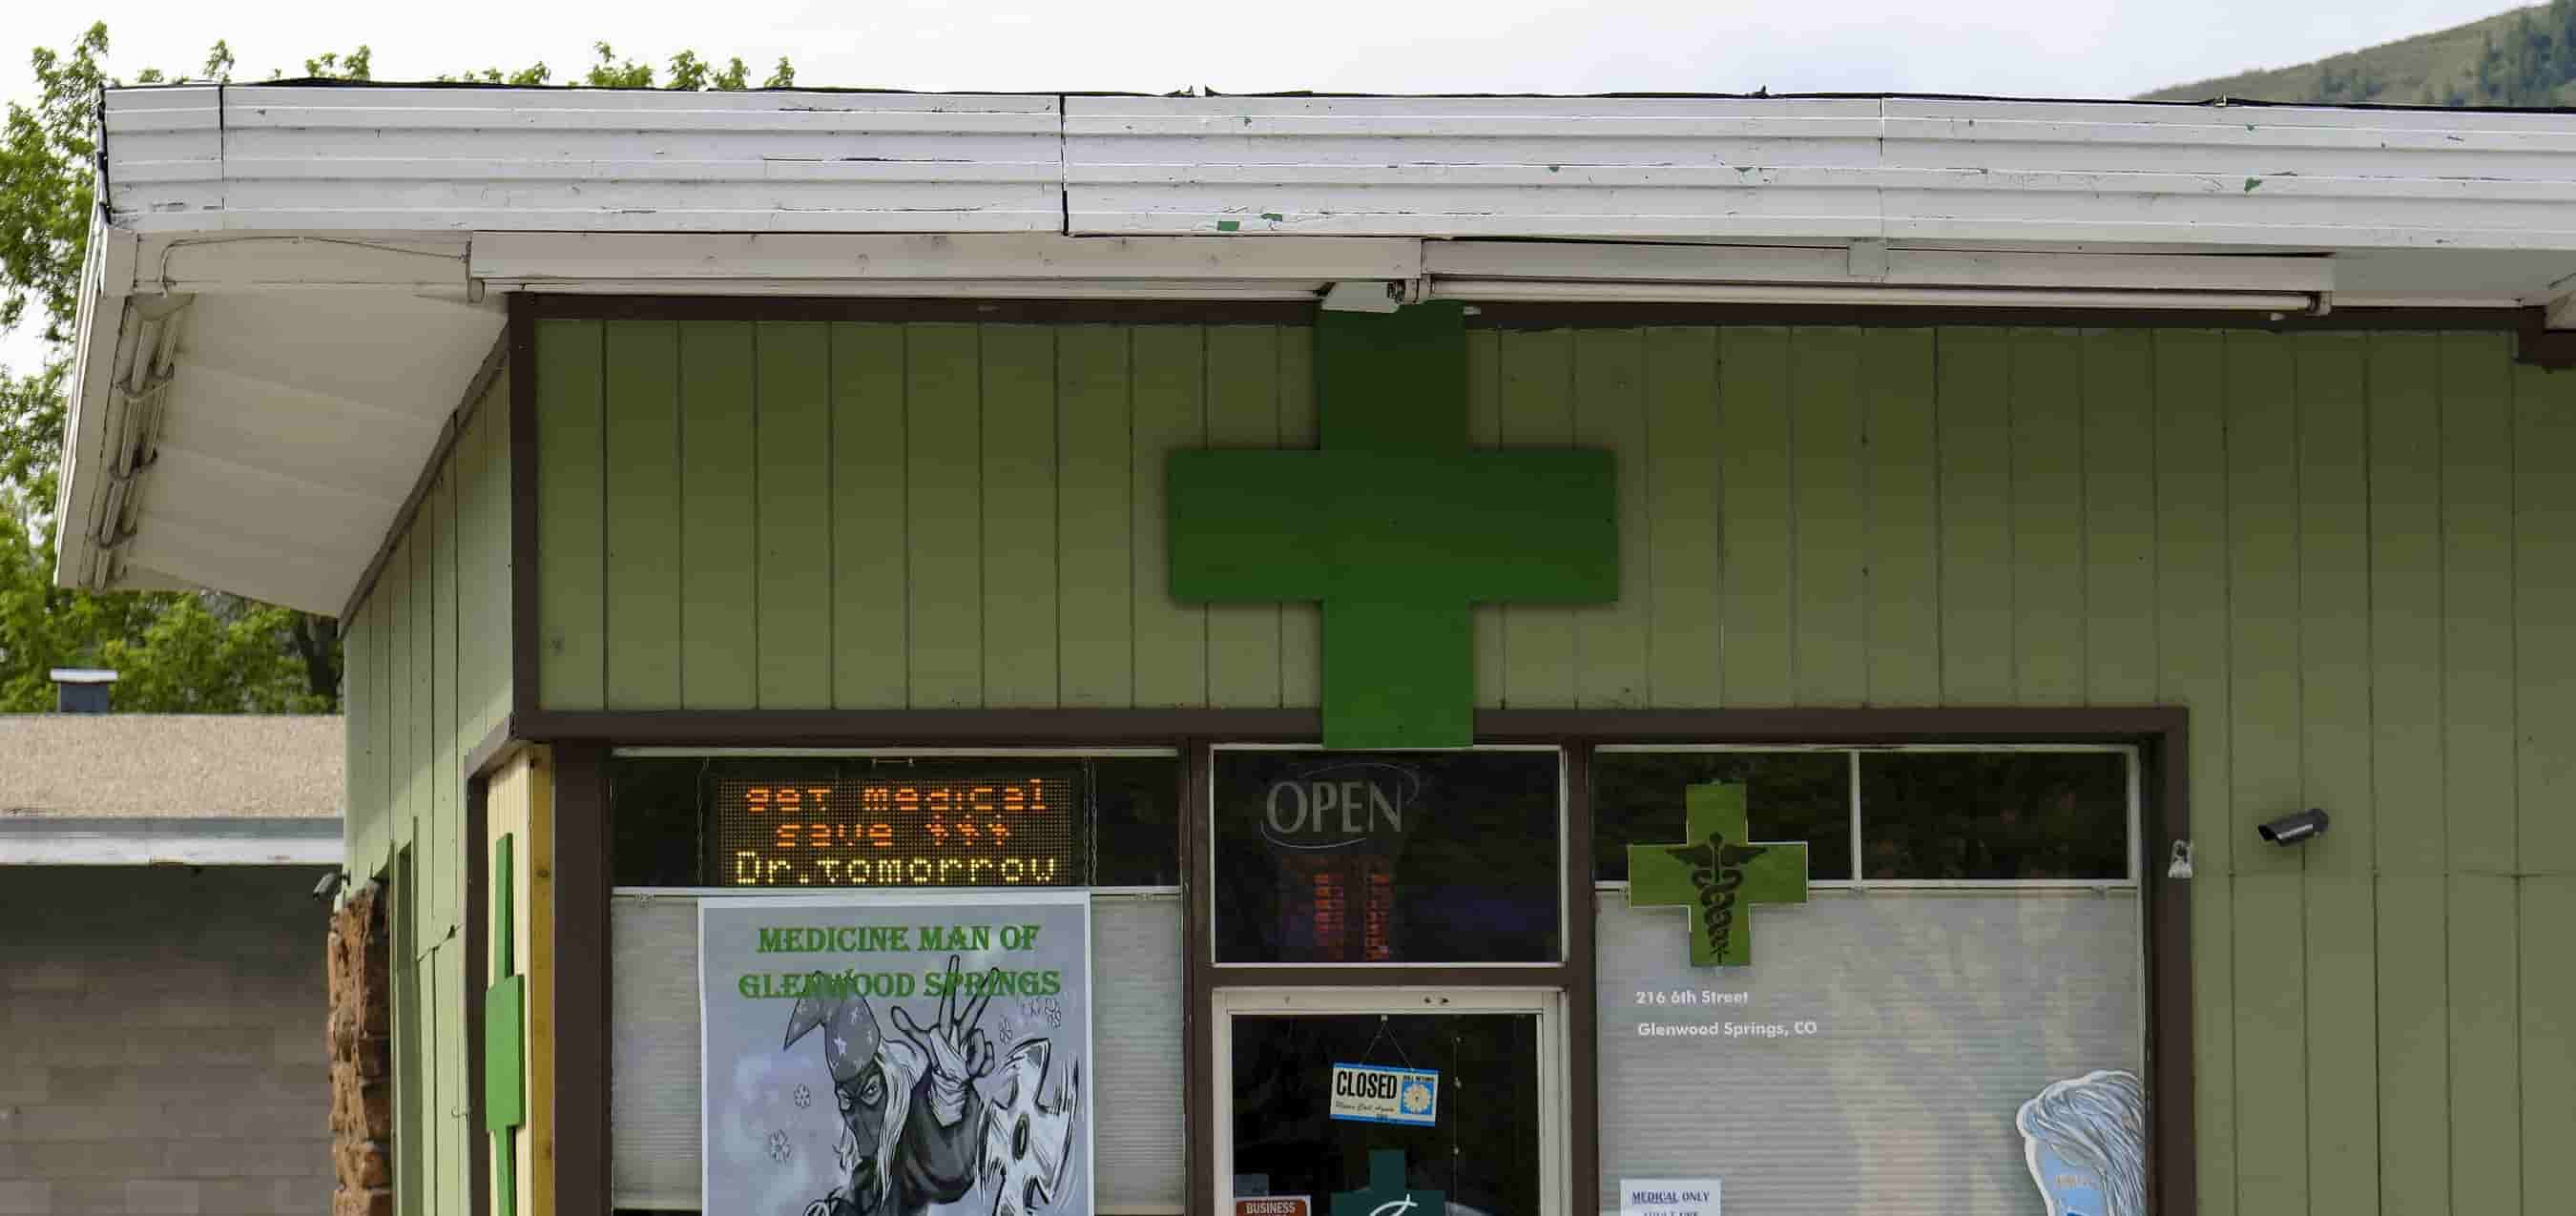 Glenwood Springs, Colorado, USA - May 21, 2014: The Medicine Man of Glenwood Springs store is a medical marijuana dispensary.